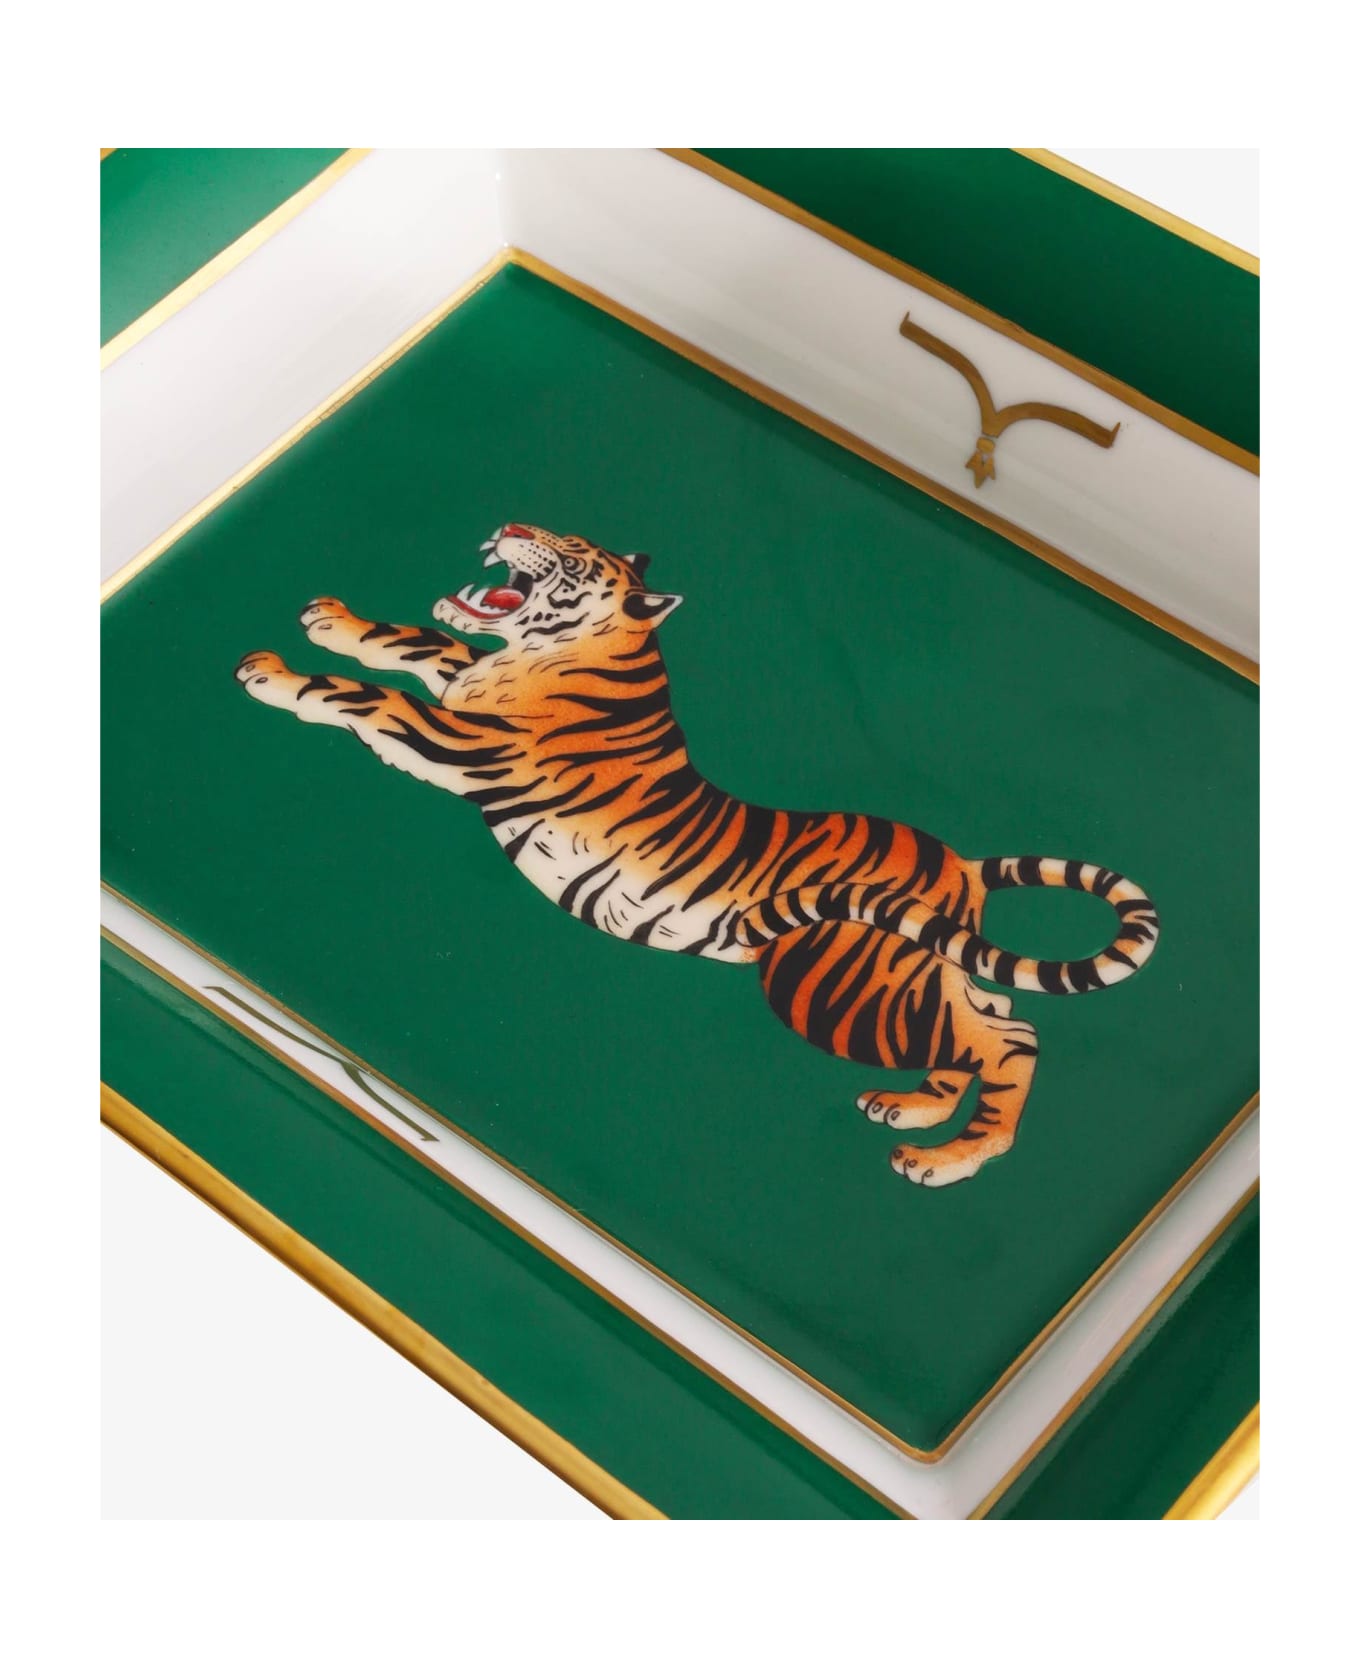 Larusmiani Pocket Emptier "tigre"  - Green インテリア雑貨